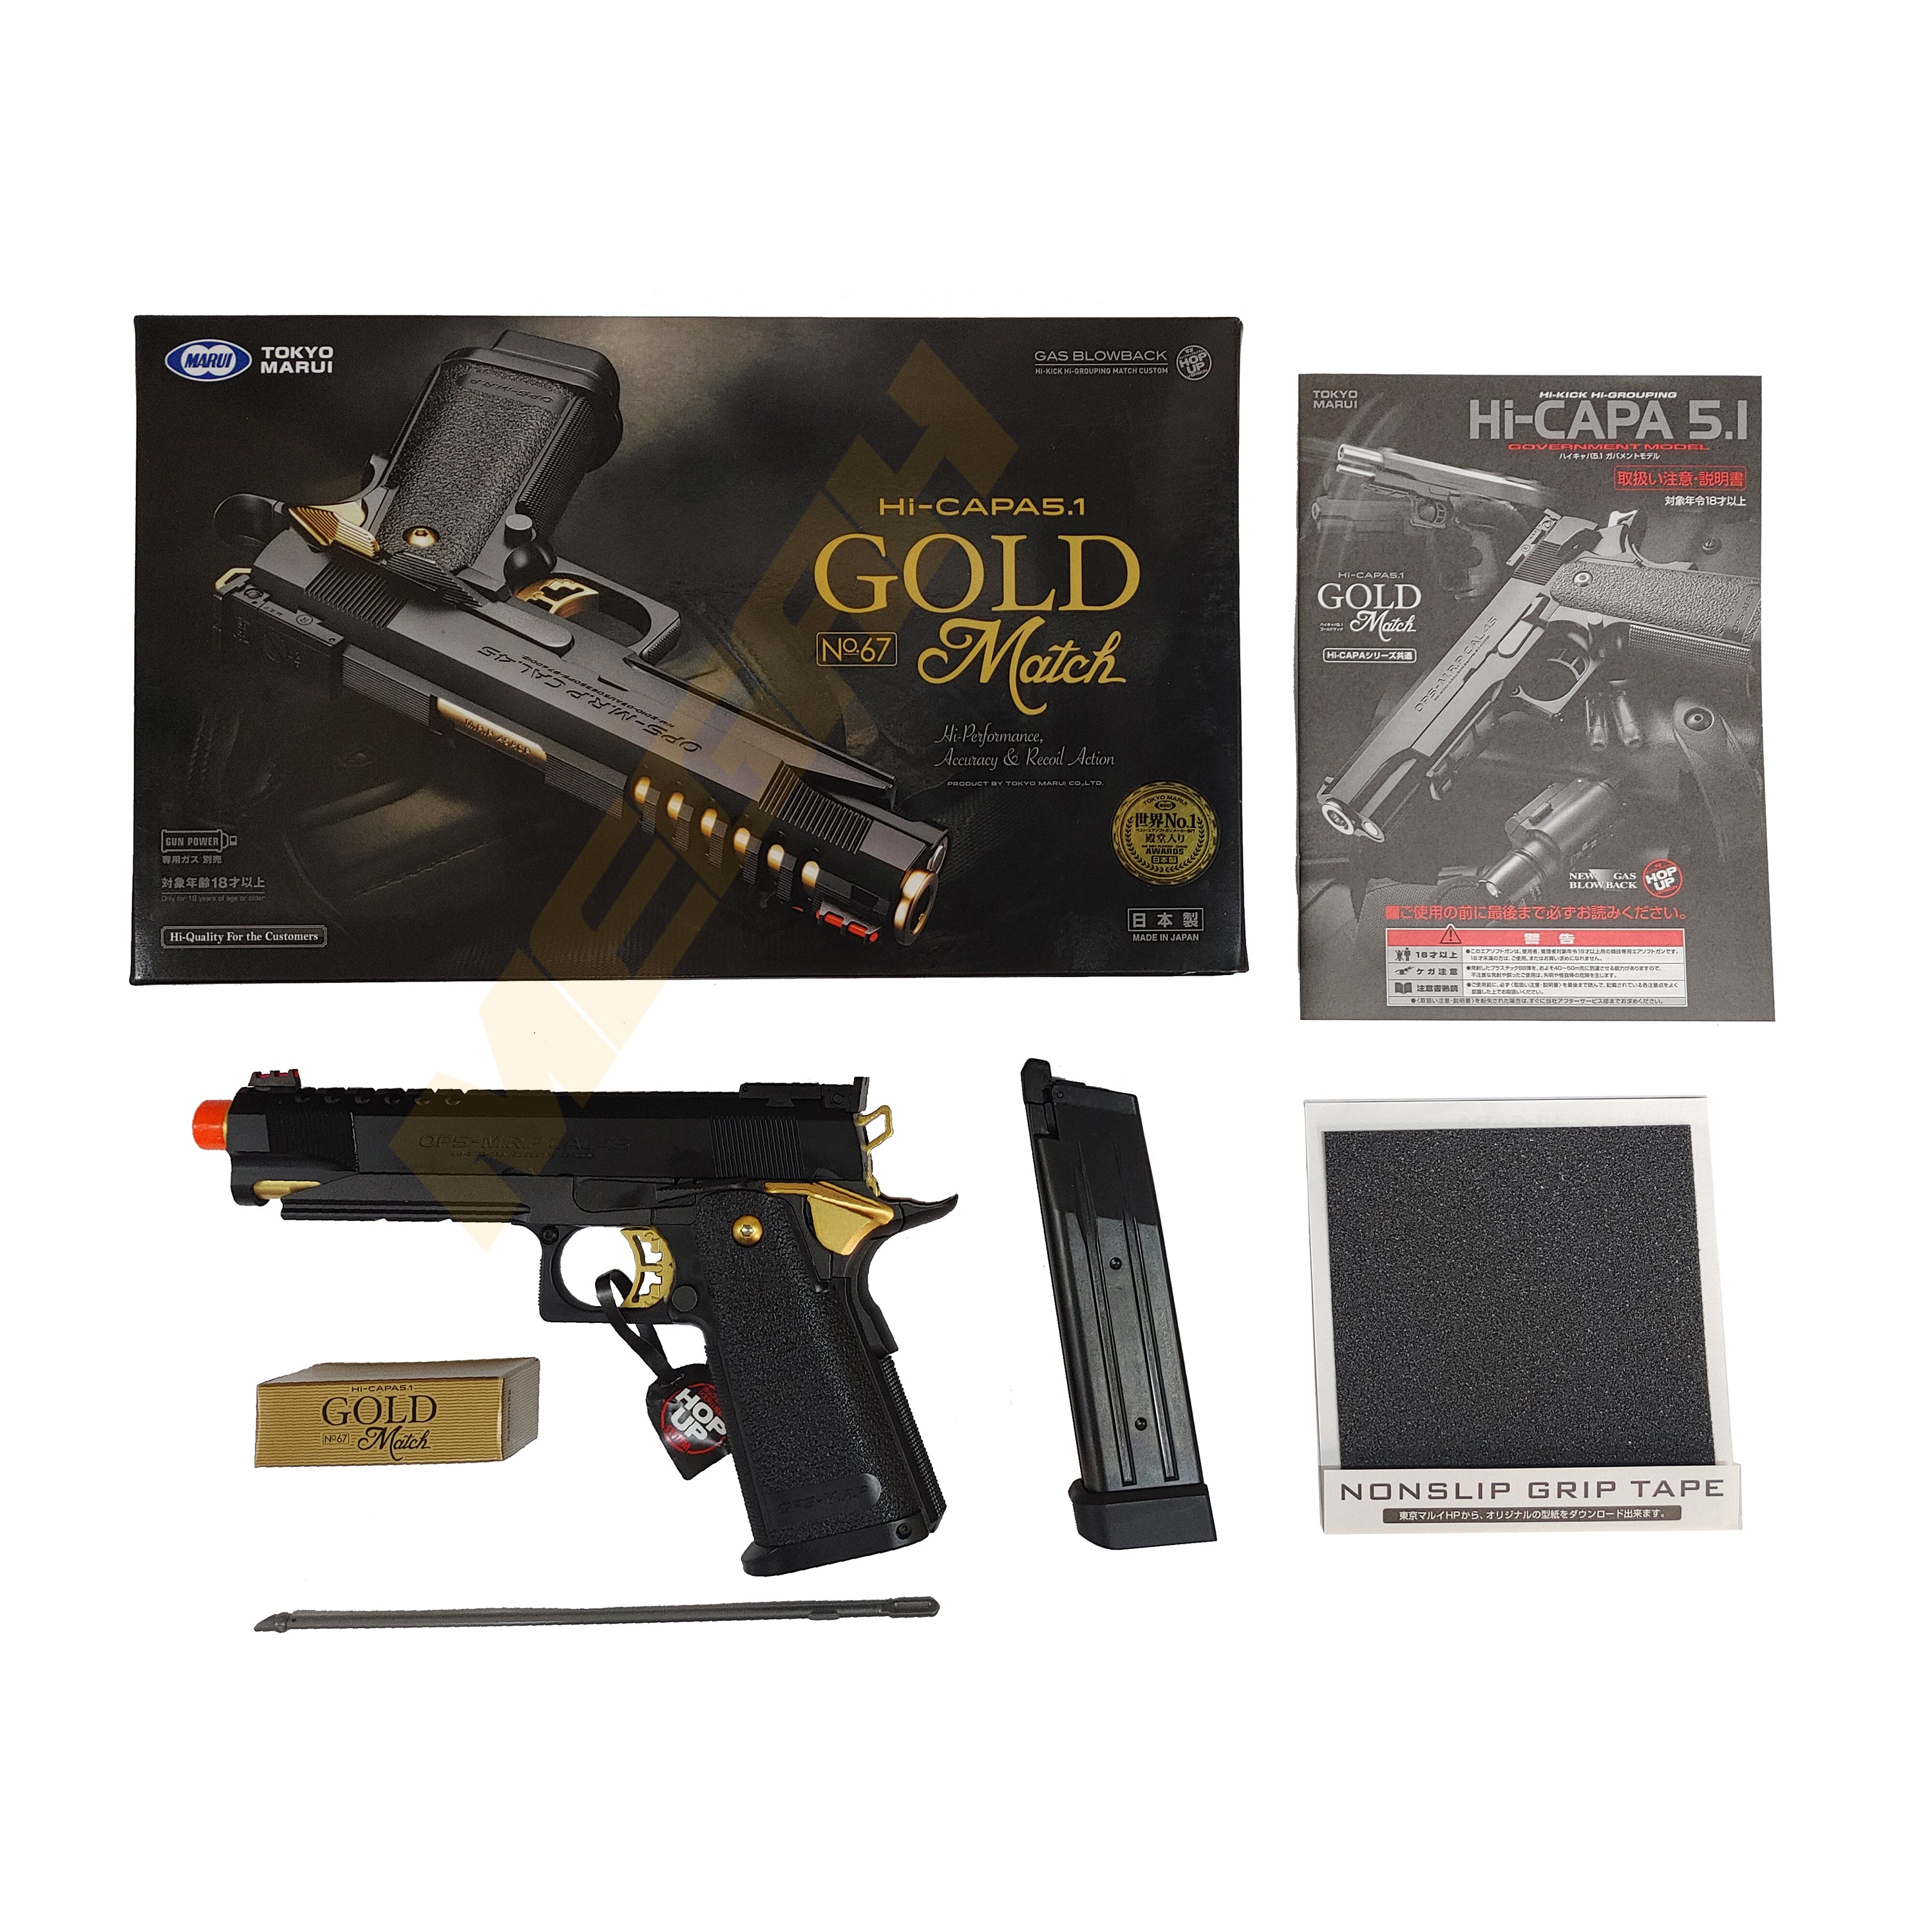 TOKYO MARUI HI-CAPA 5.1 GOLD MATCH GBB PISTOL - AIRSOFT GUN